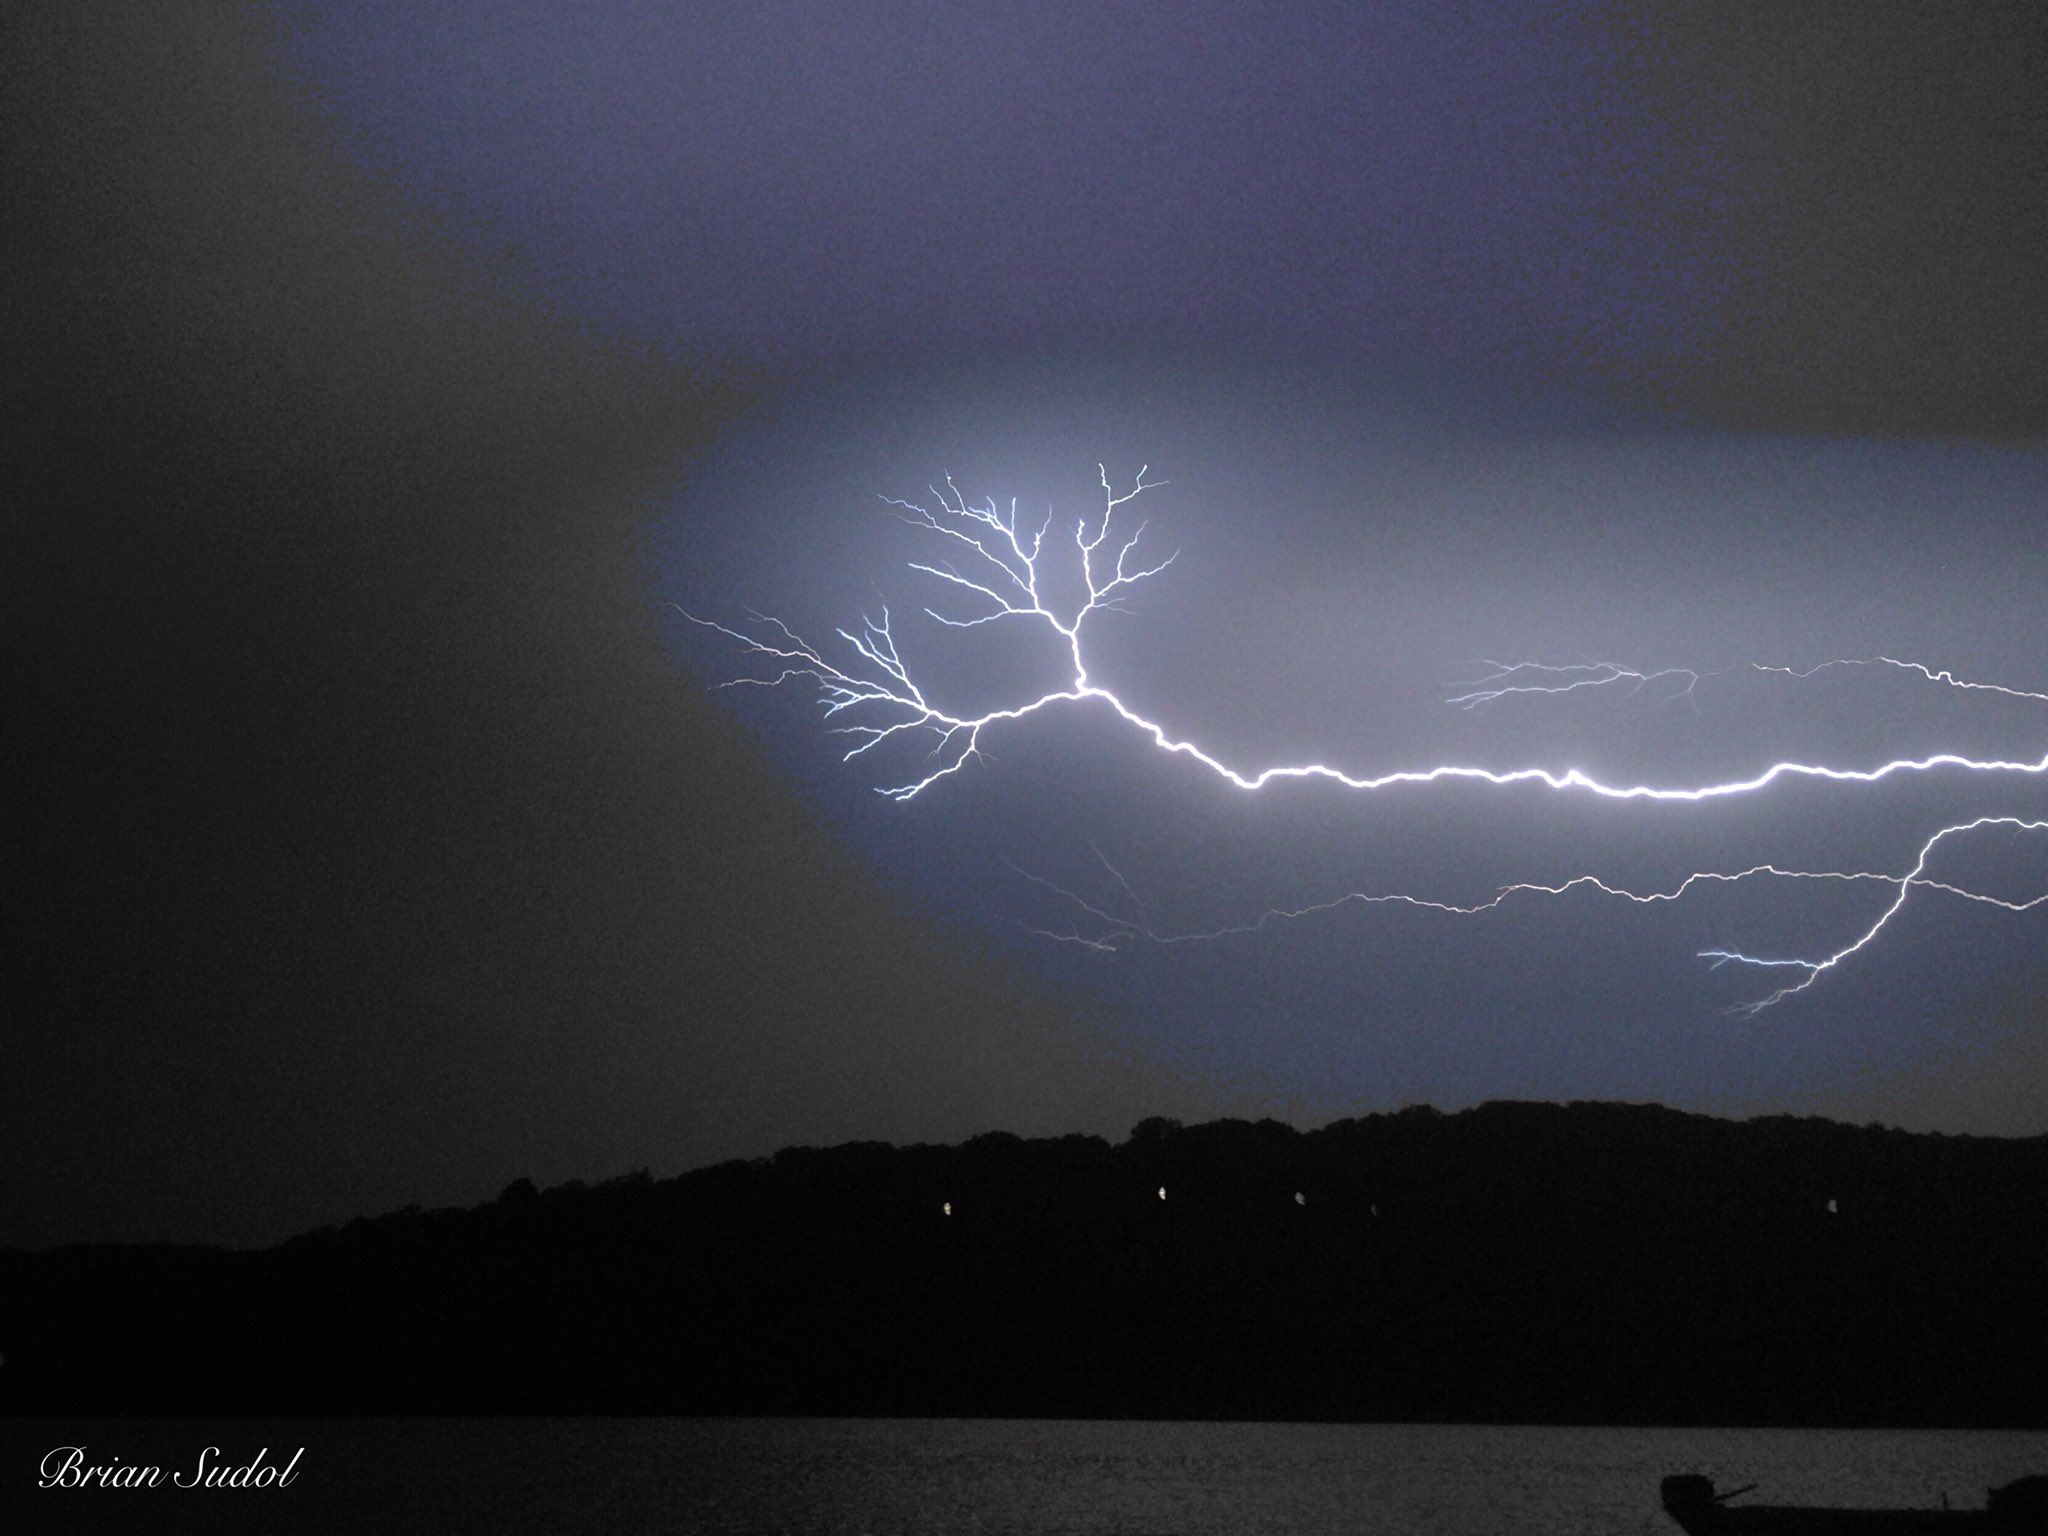 Photo of lightning